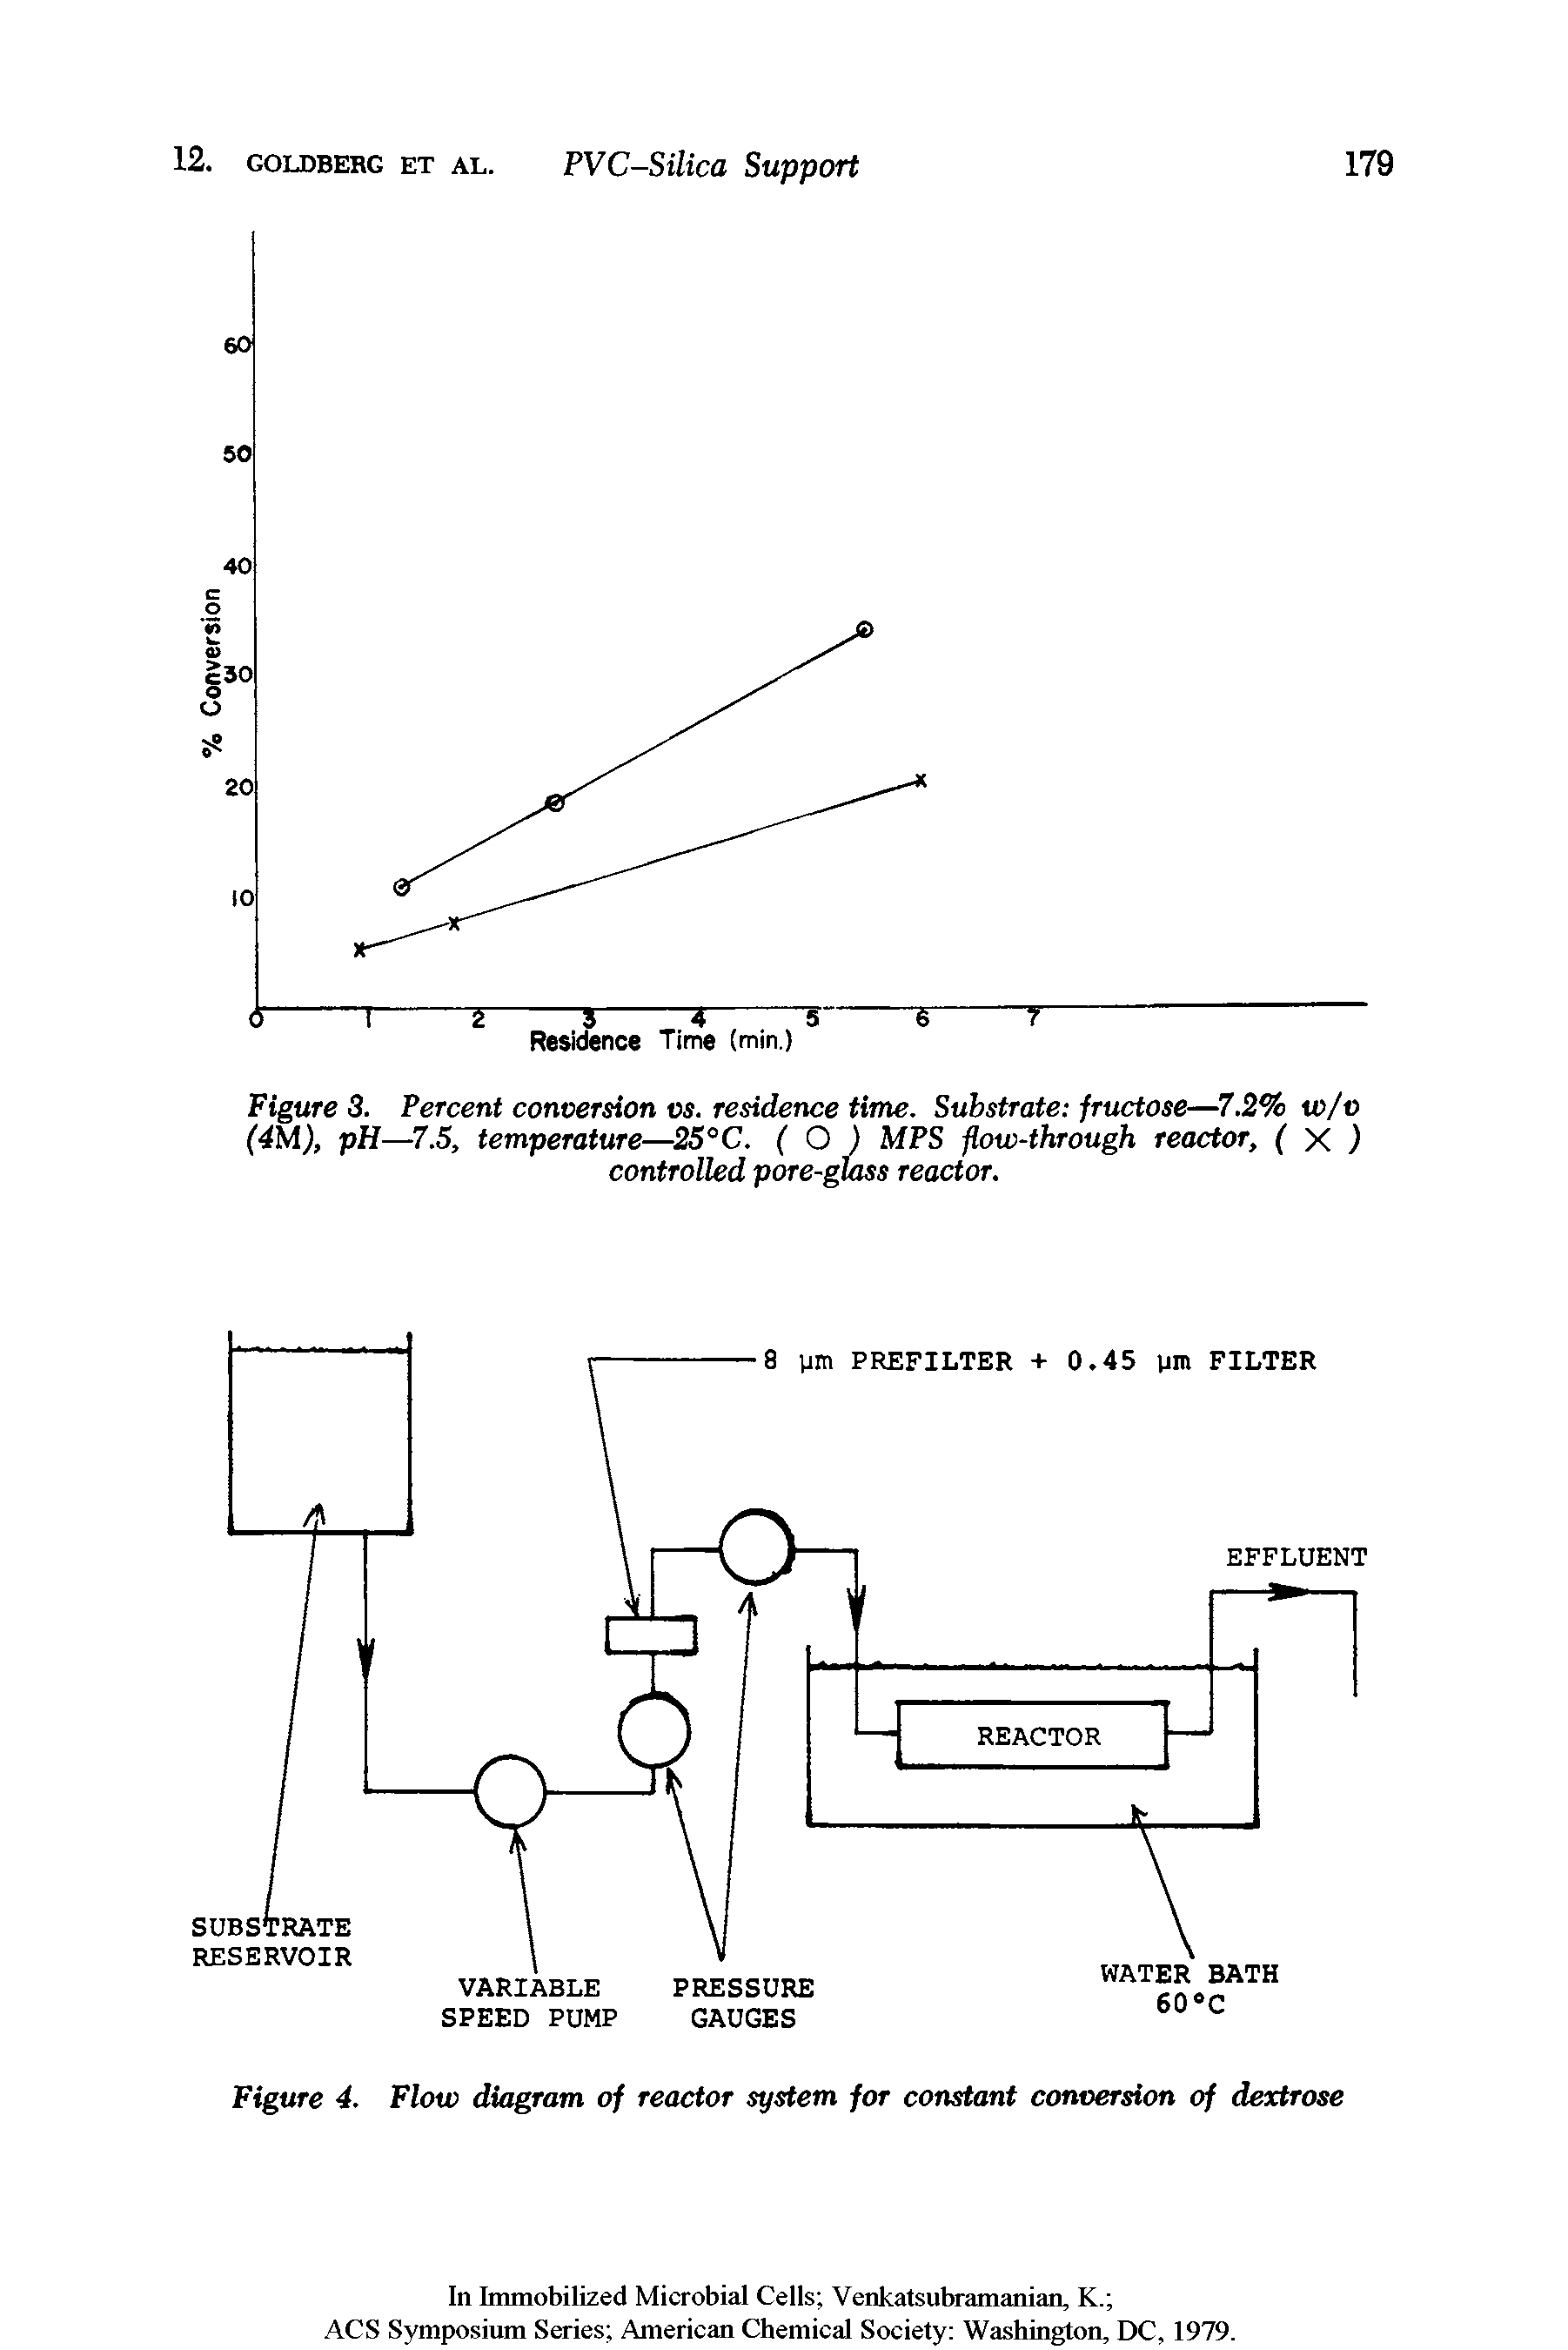 Figure 4. Flow diagram of reactor system for constant conversion of dextrose...